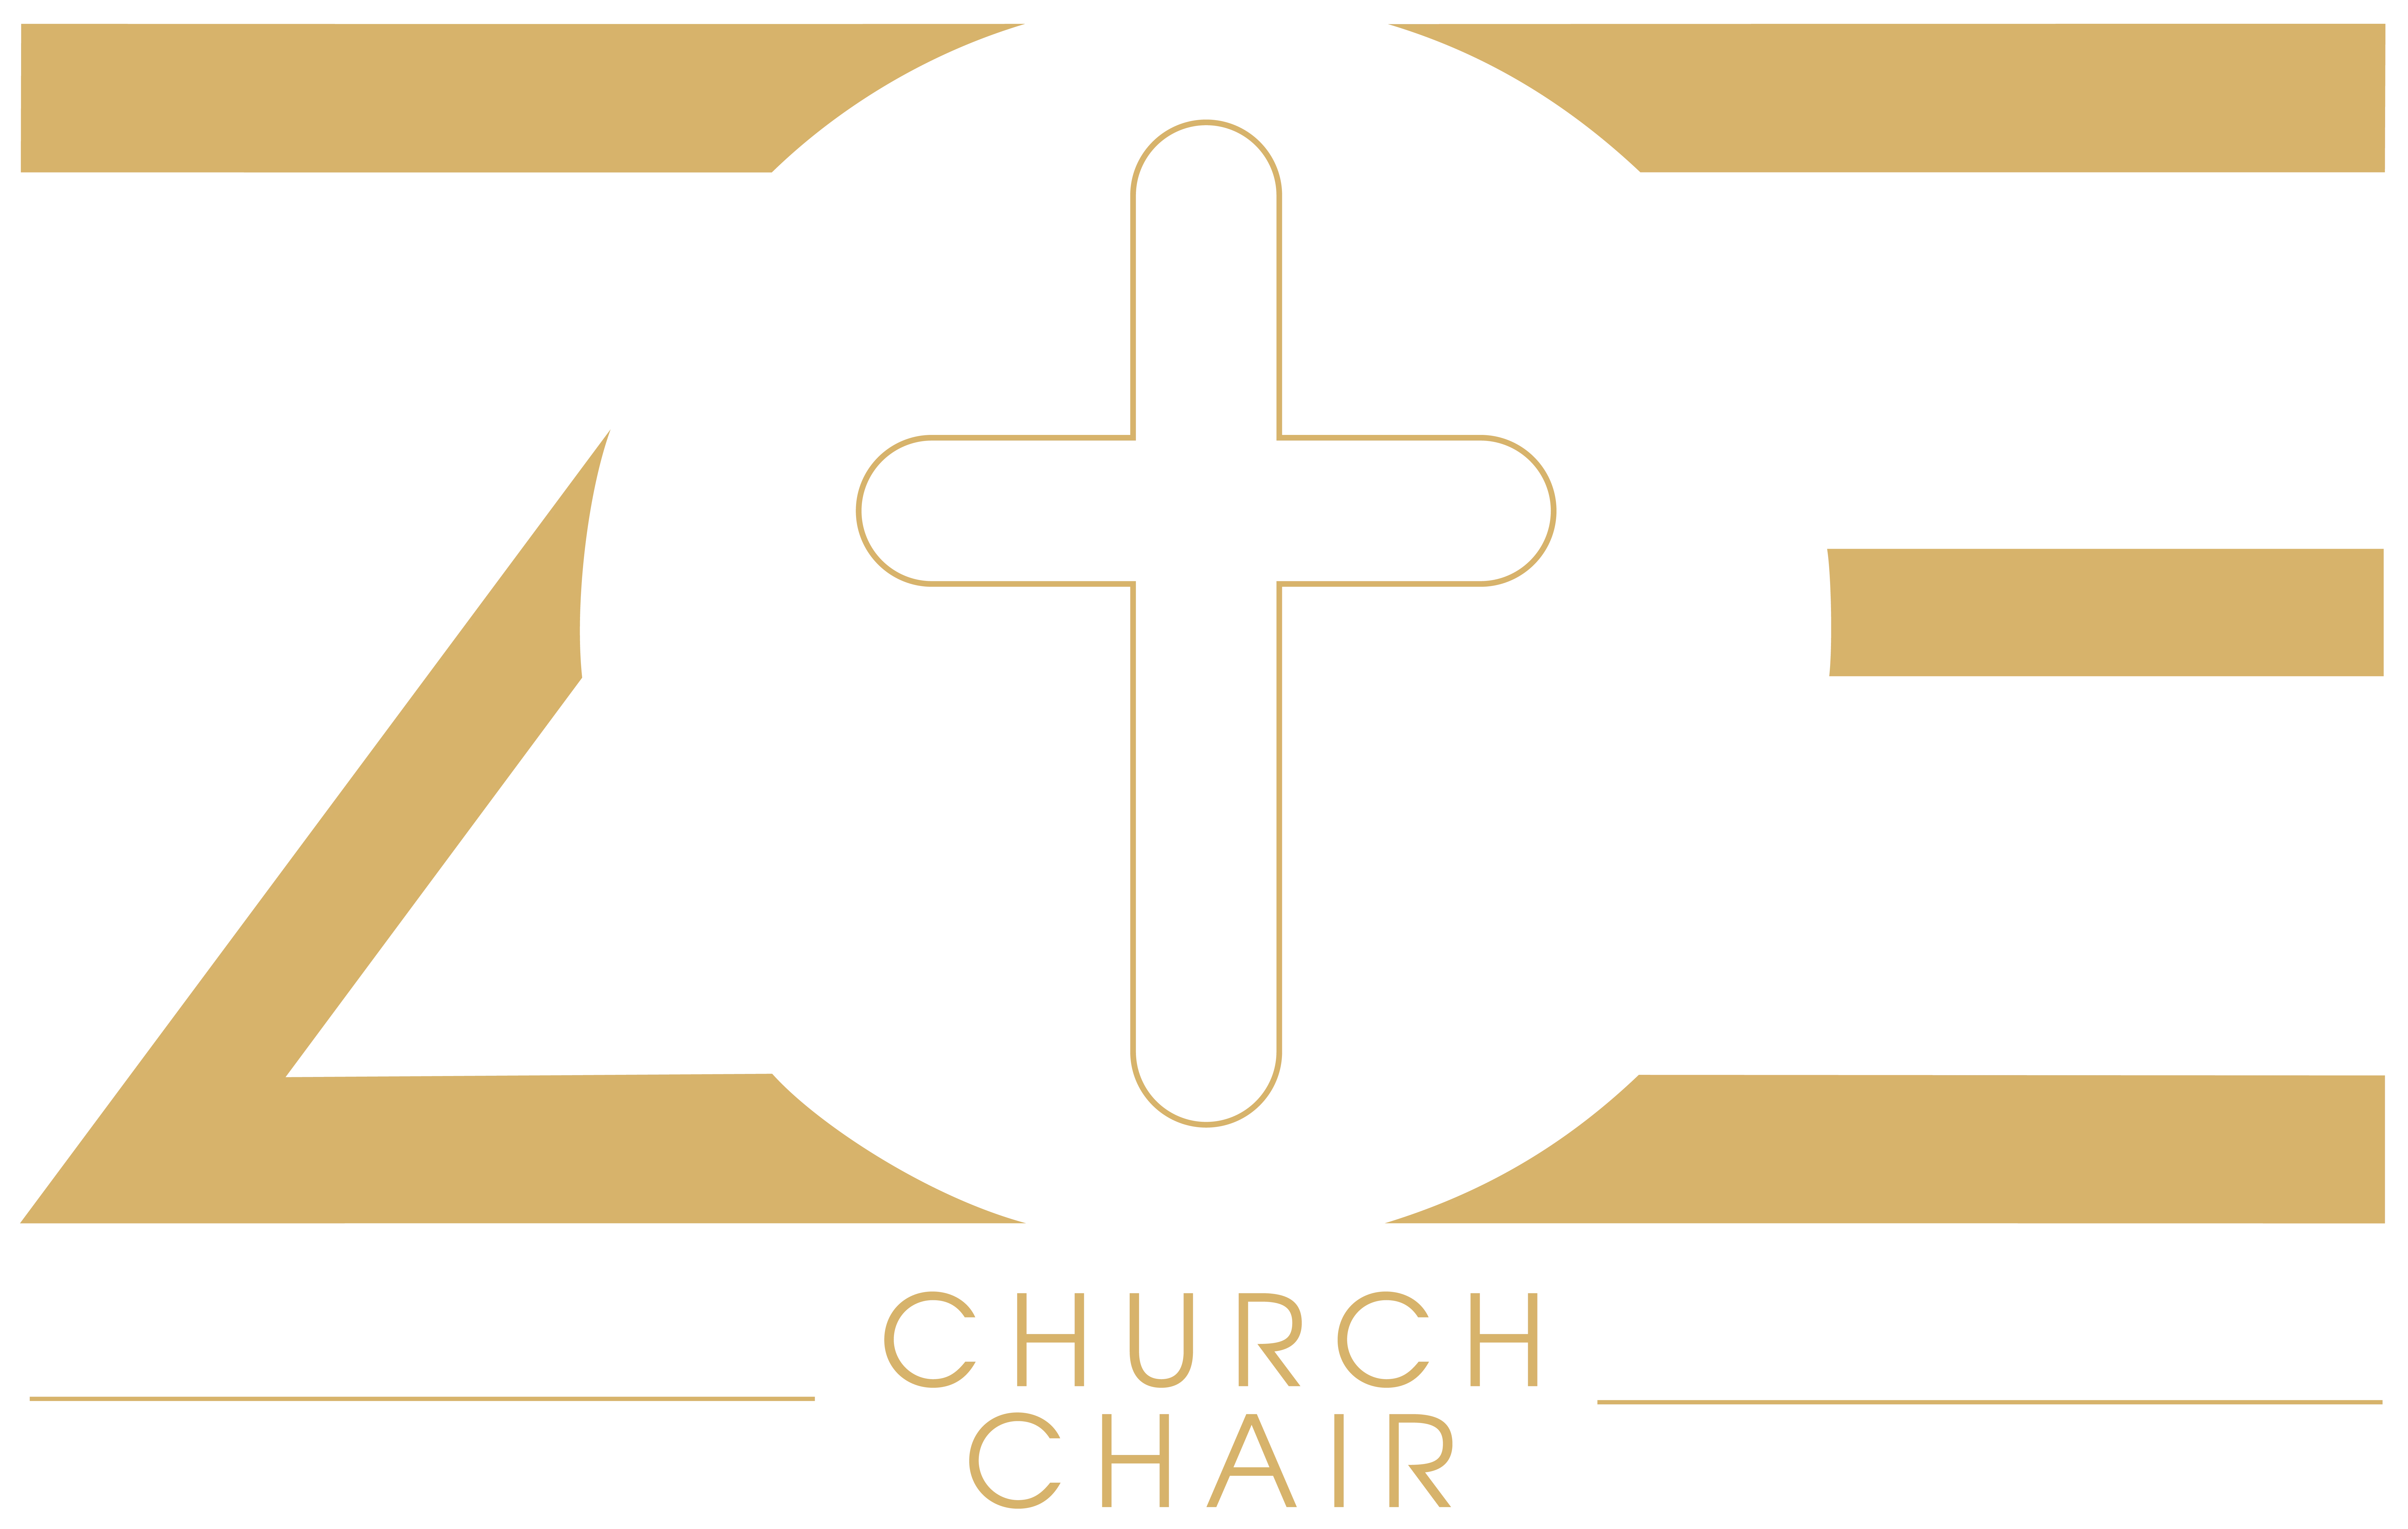 ZOE church chairs logo 